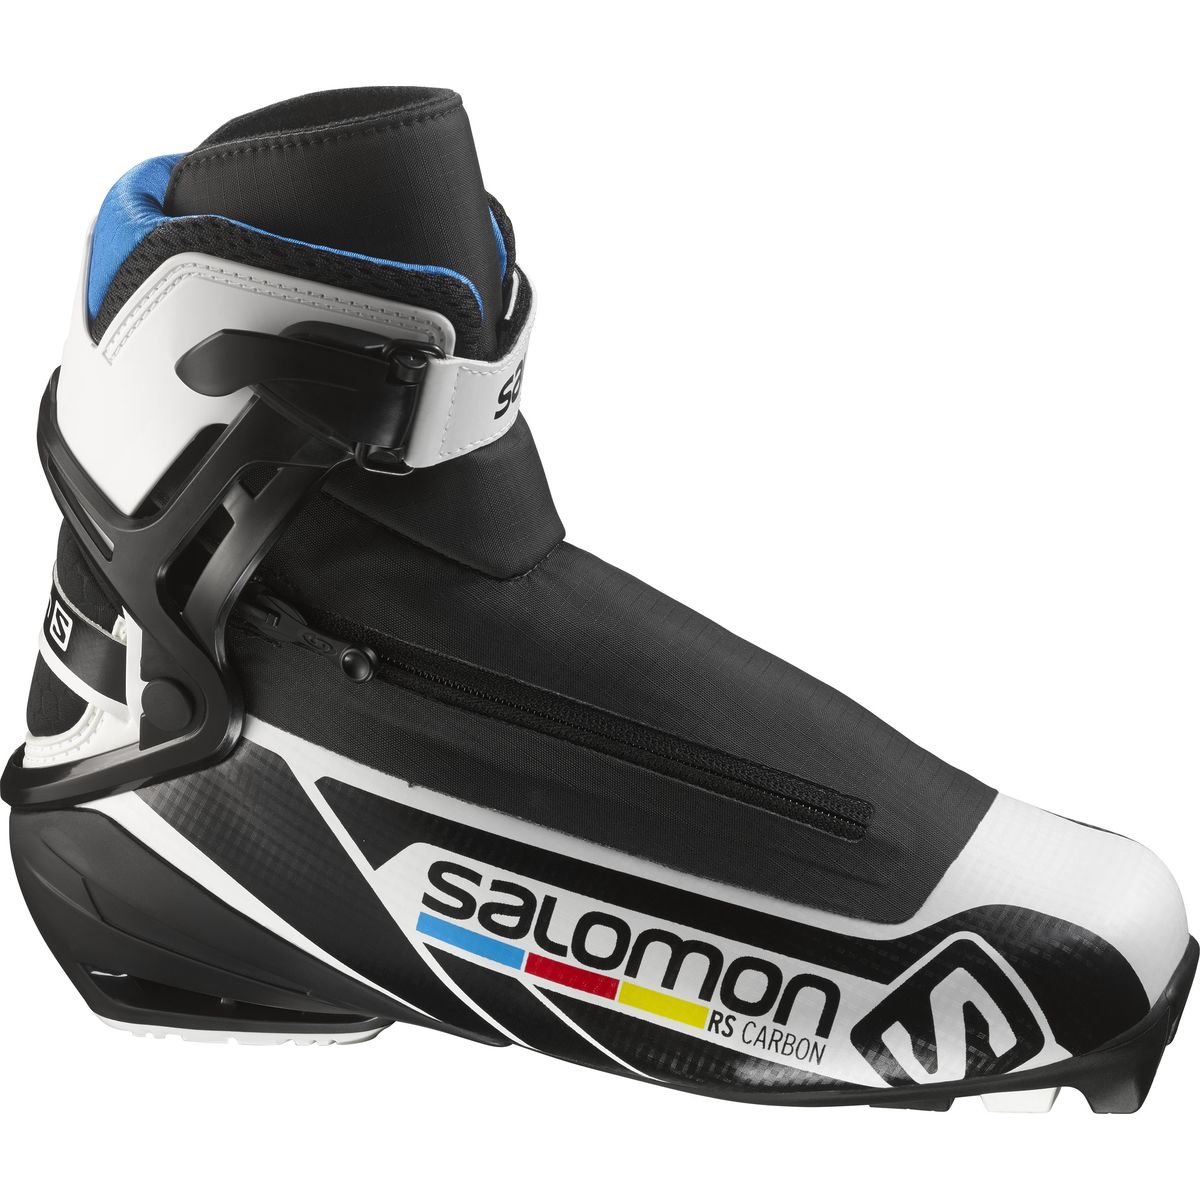 Salomon RS Carbon Skate Boot - Ski